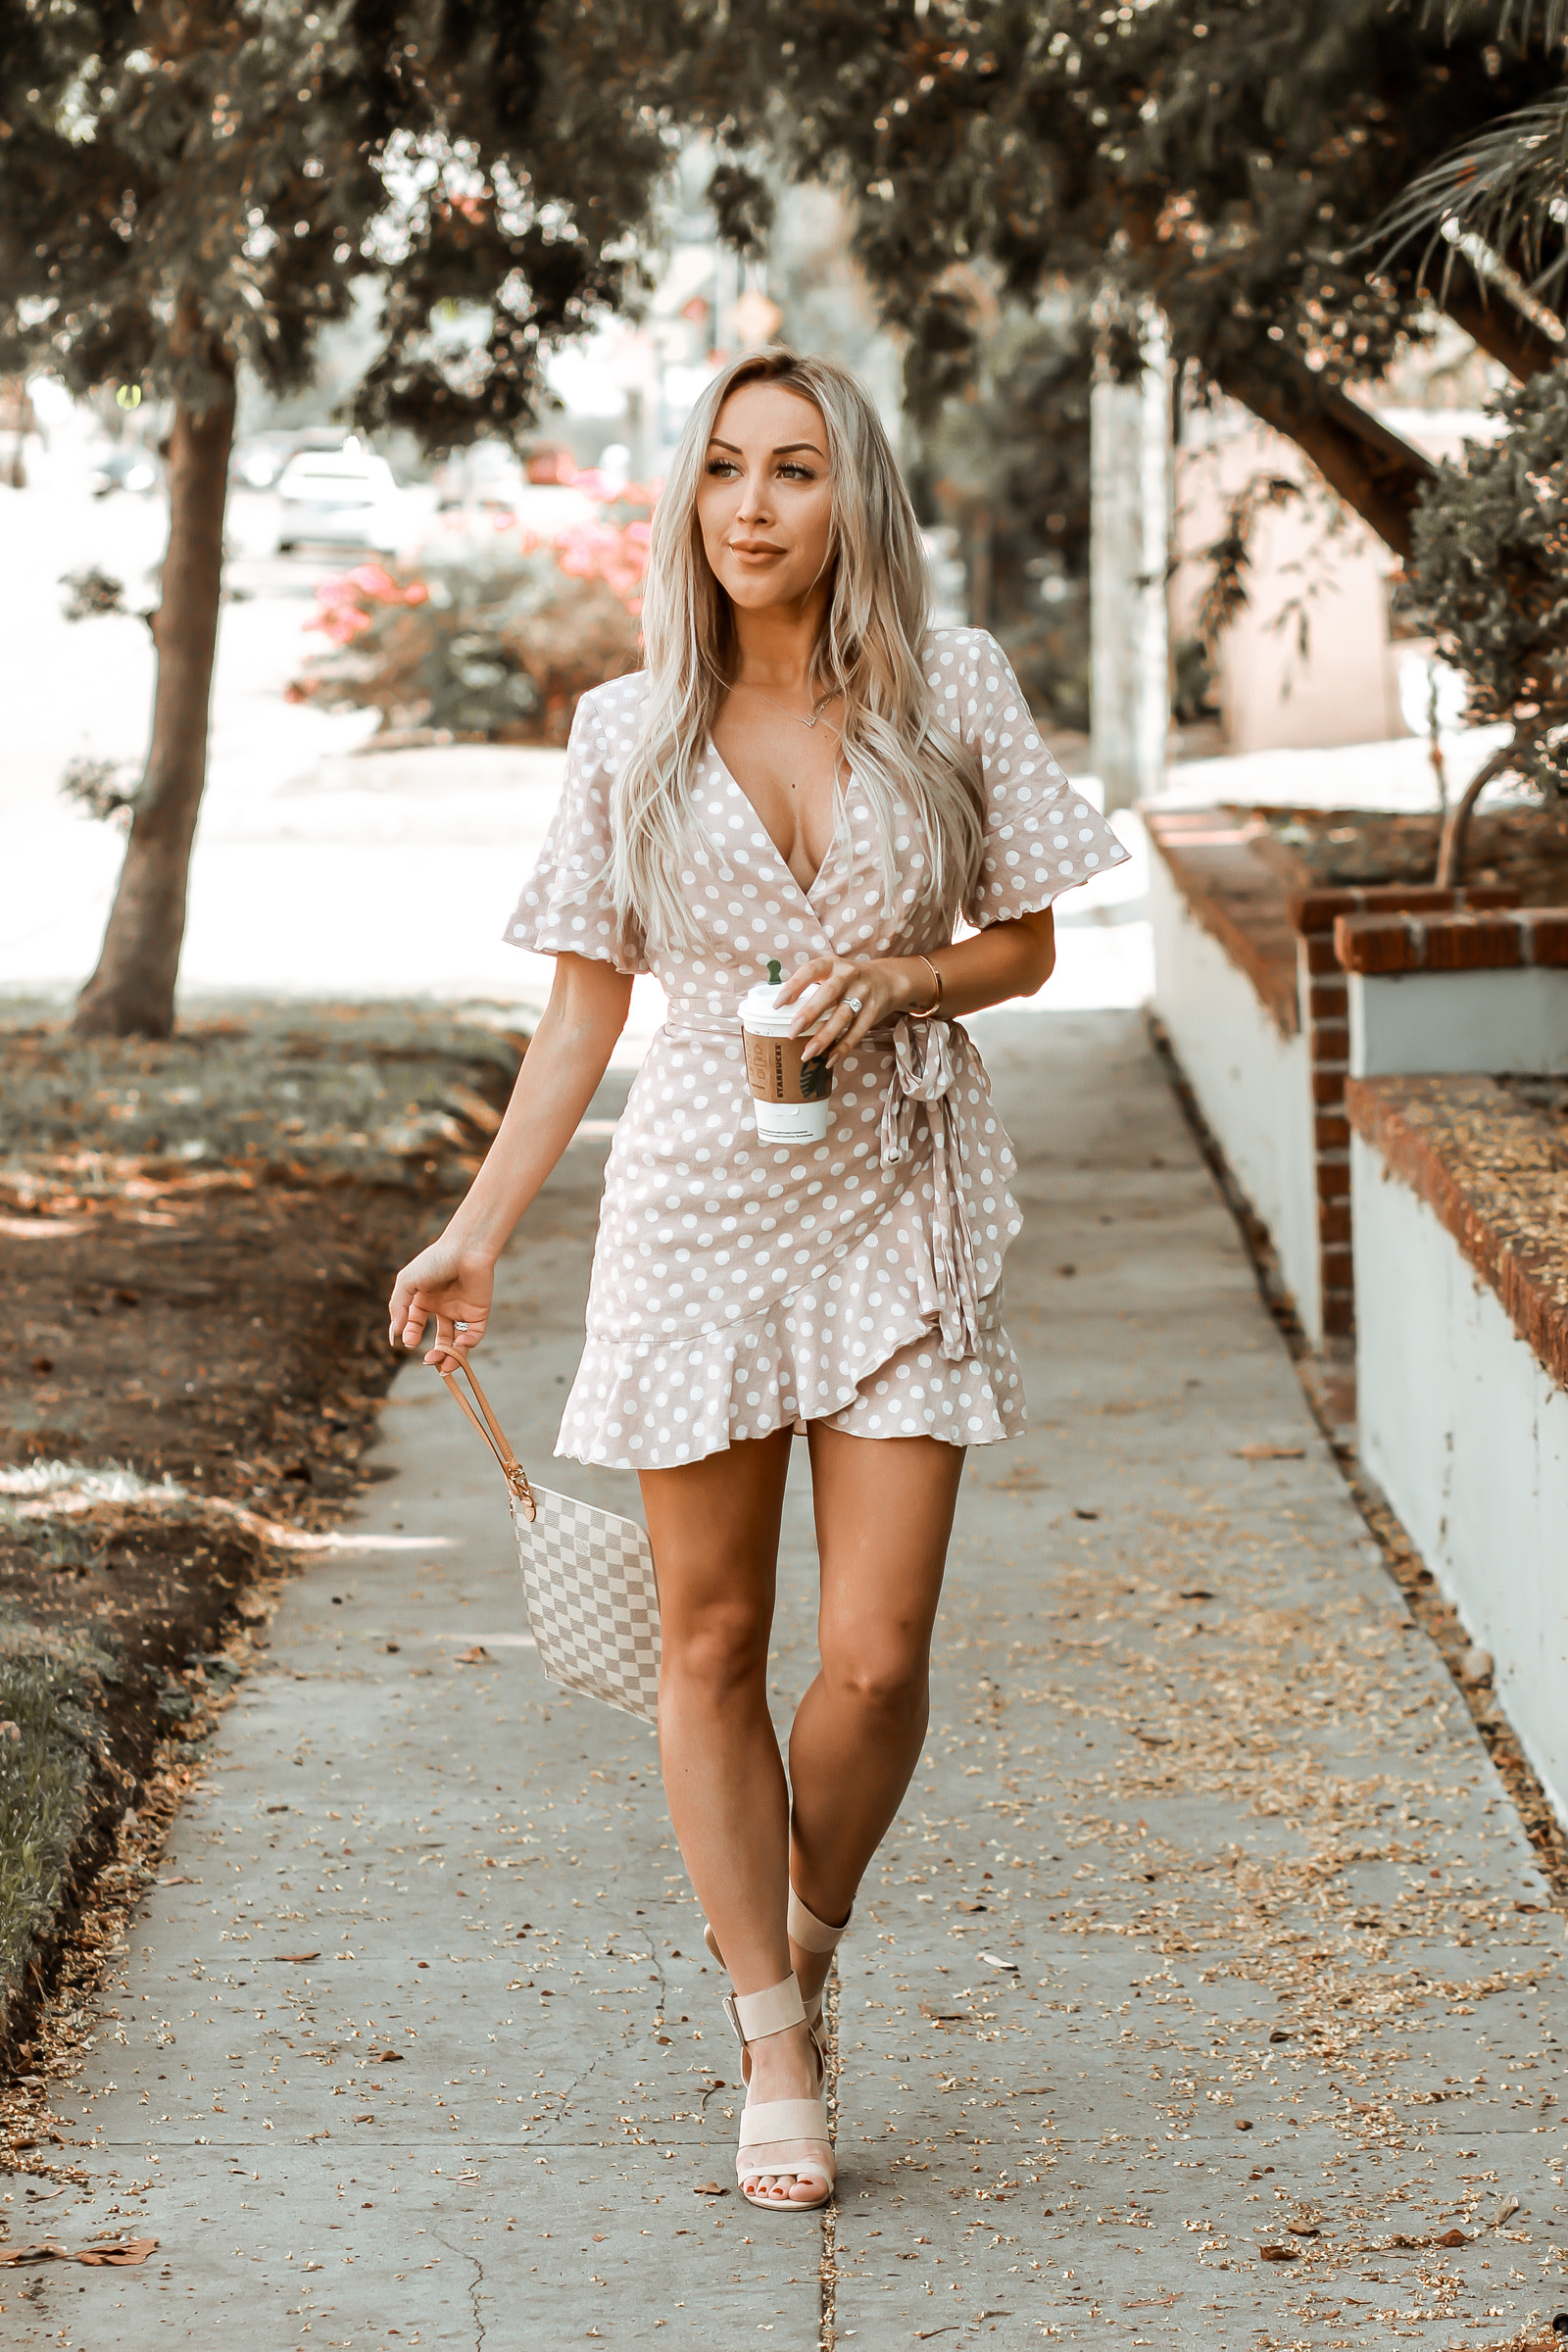 Pink Pastel Dress Polka Dots | Revolve | Pastel | Fashion Blogger | Blondie in the City by Hayley Larue